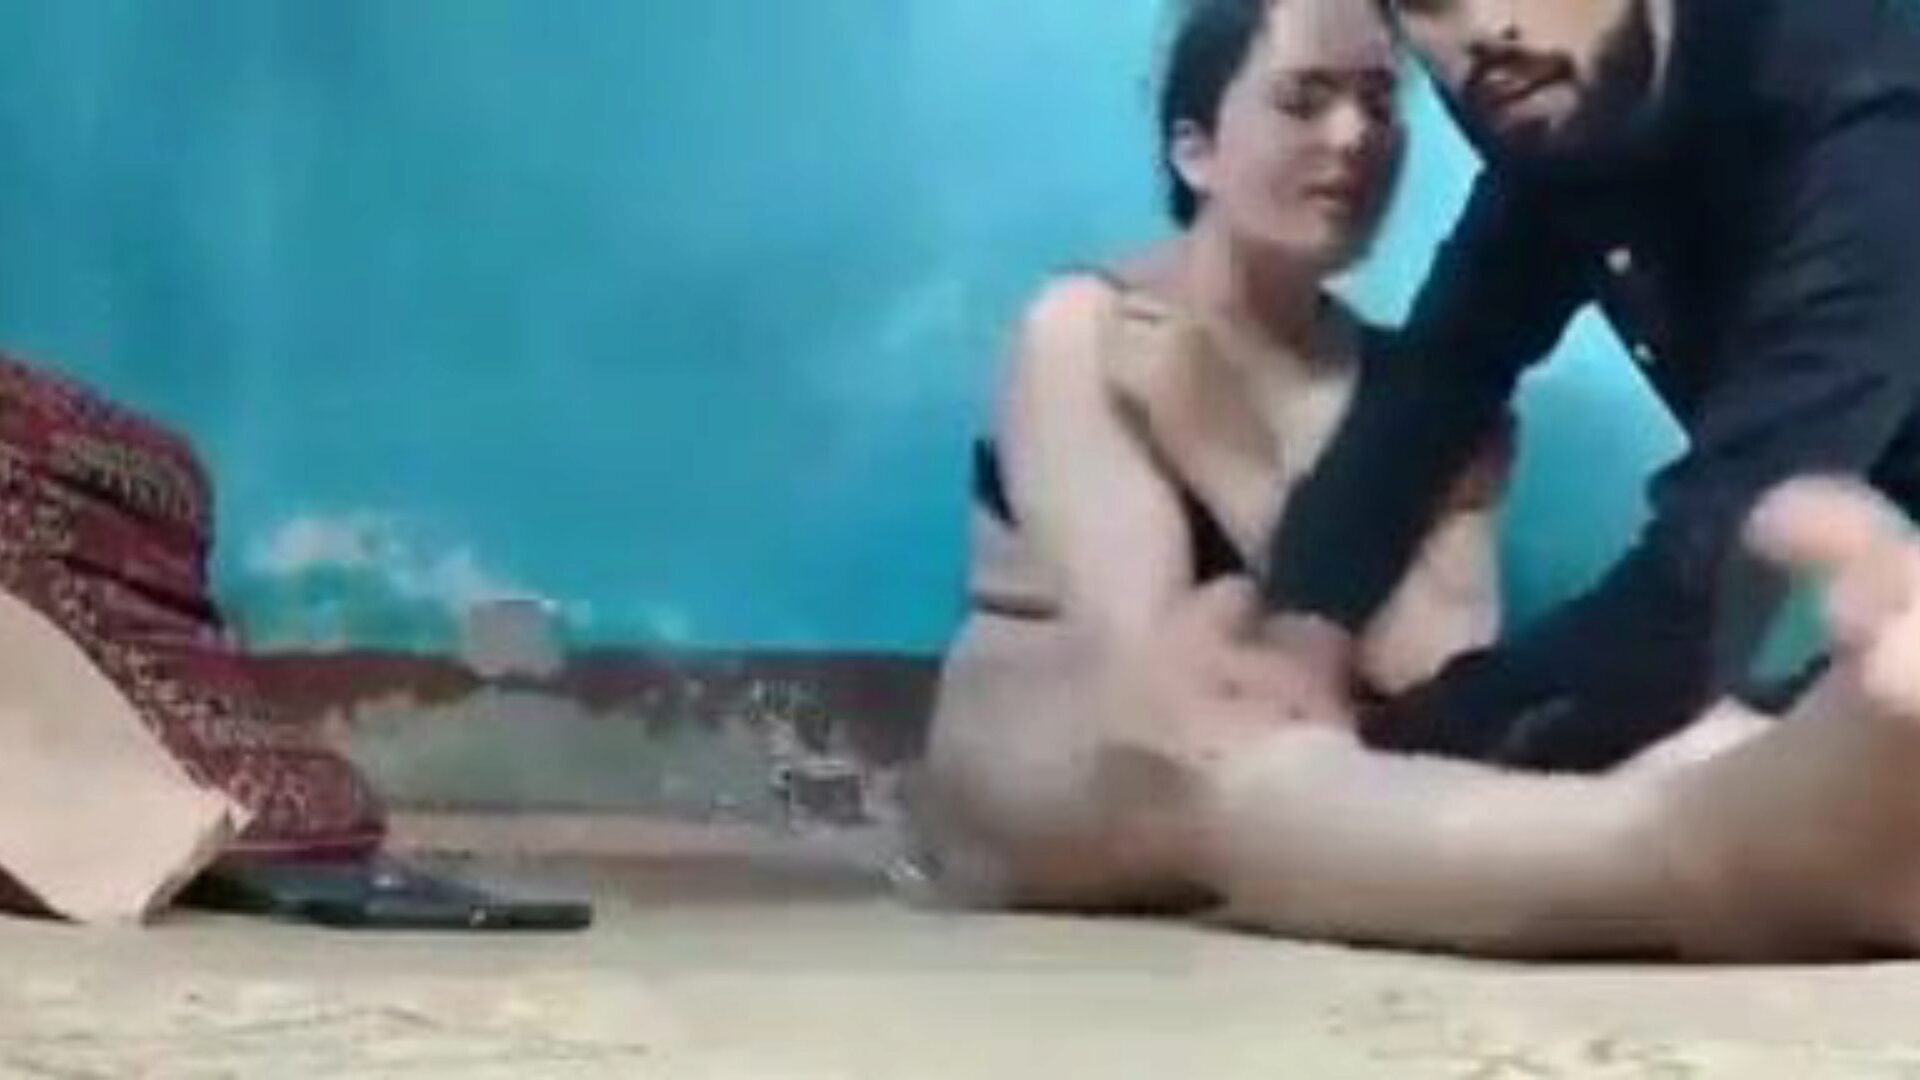 kashmiri sex video: gratis indiase porno video 69 - xhamster bekijk kashmiri sex video tube bang-out video gratis op xhamster, met de meest sexy verzameling indiase xxx gratis sex & verhaal porno aflevering scènes